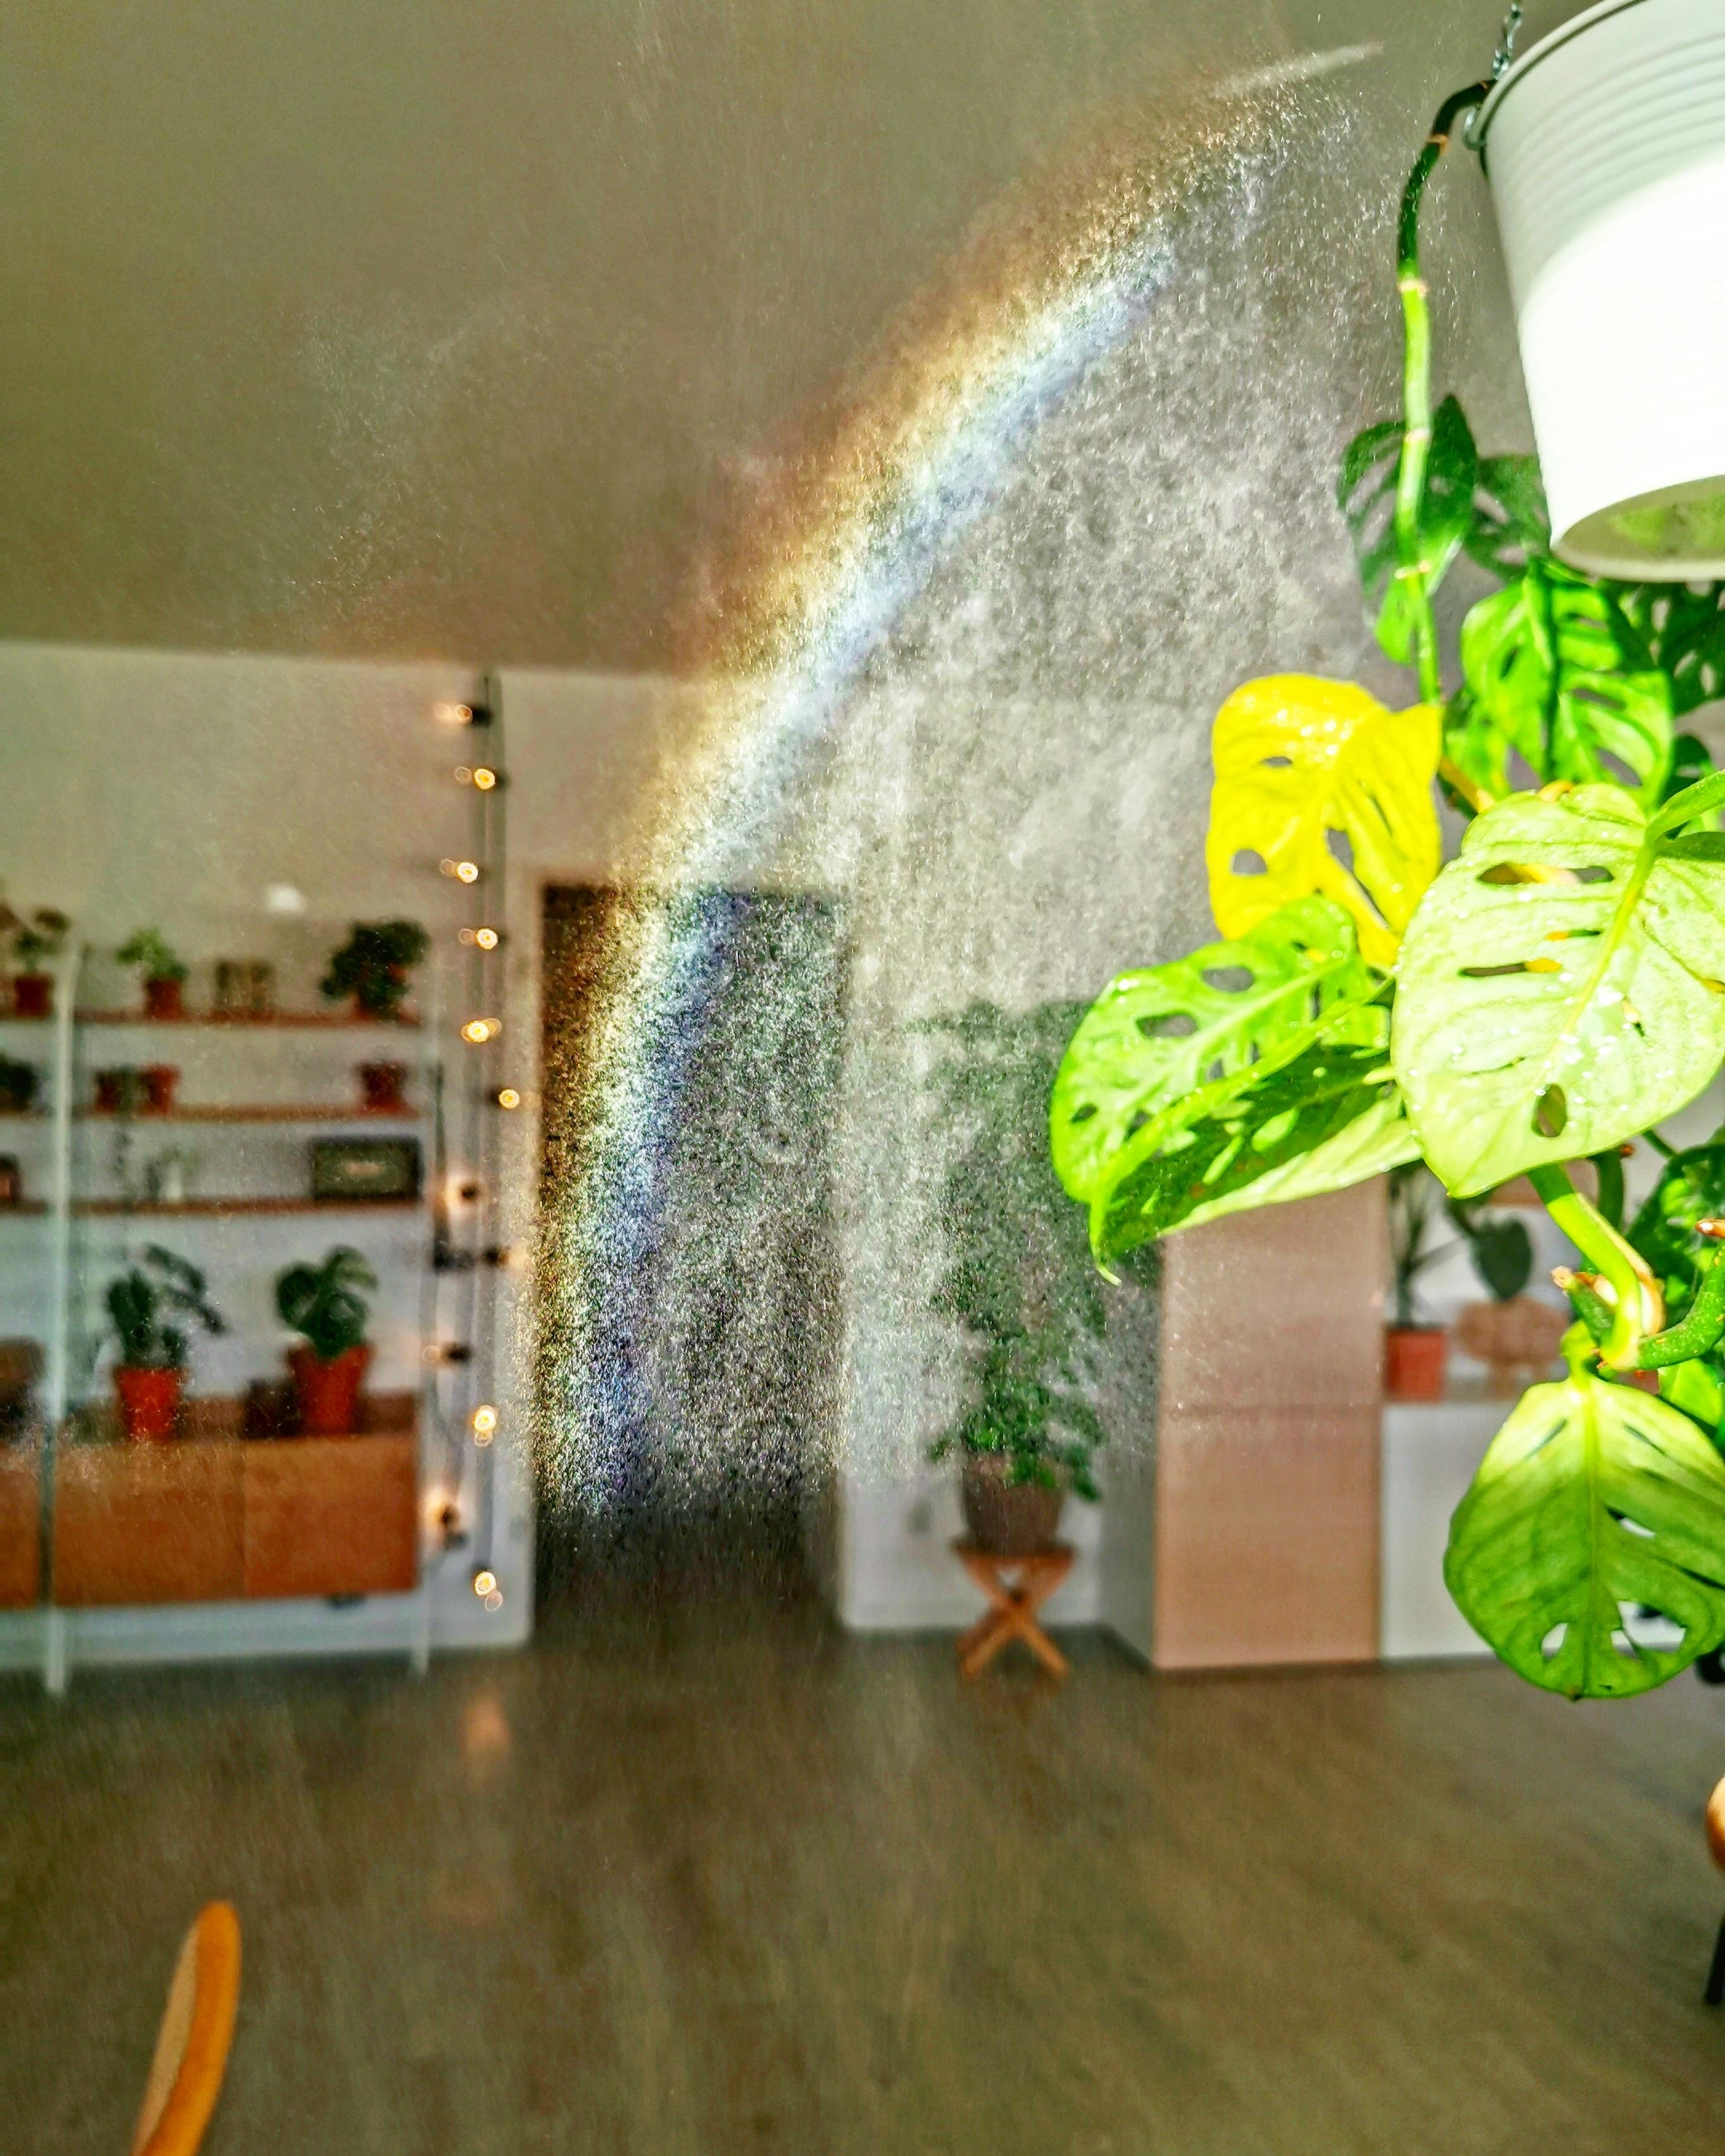 Indoor-rainbow.
#indoorrainbow #rainbow #plantcollector #plantsaddicted #houseofplantlovers #indoorjungle